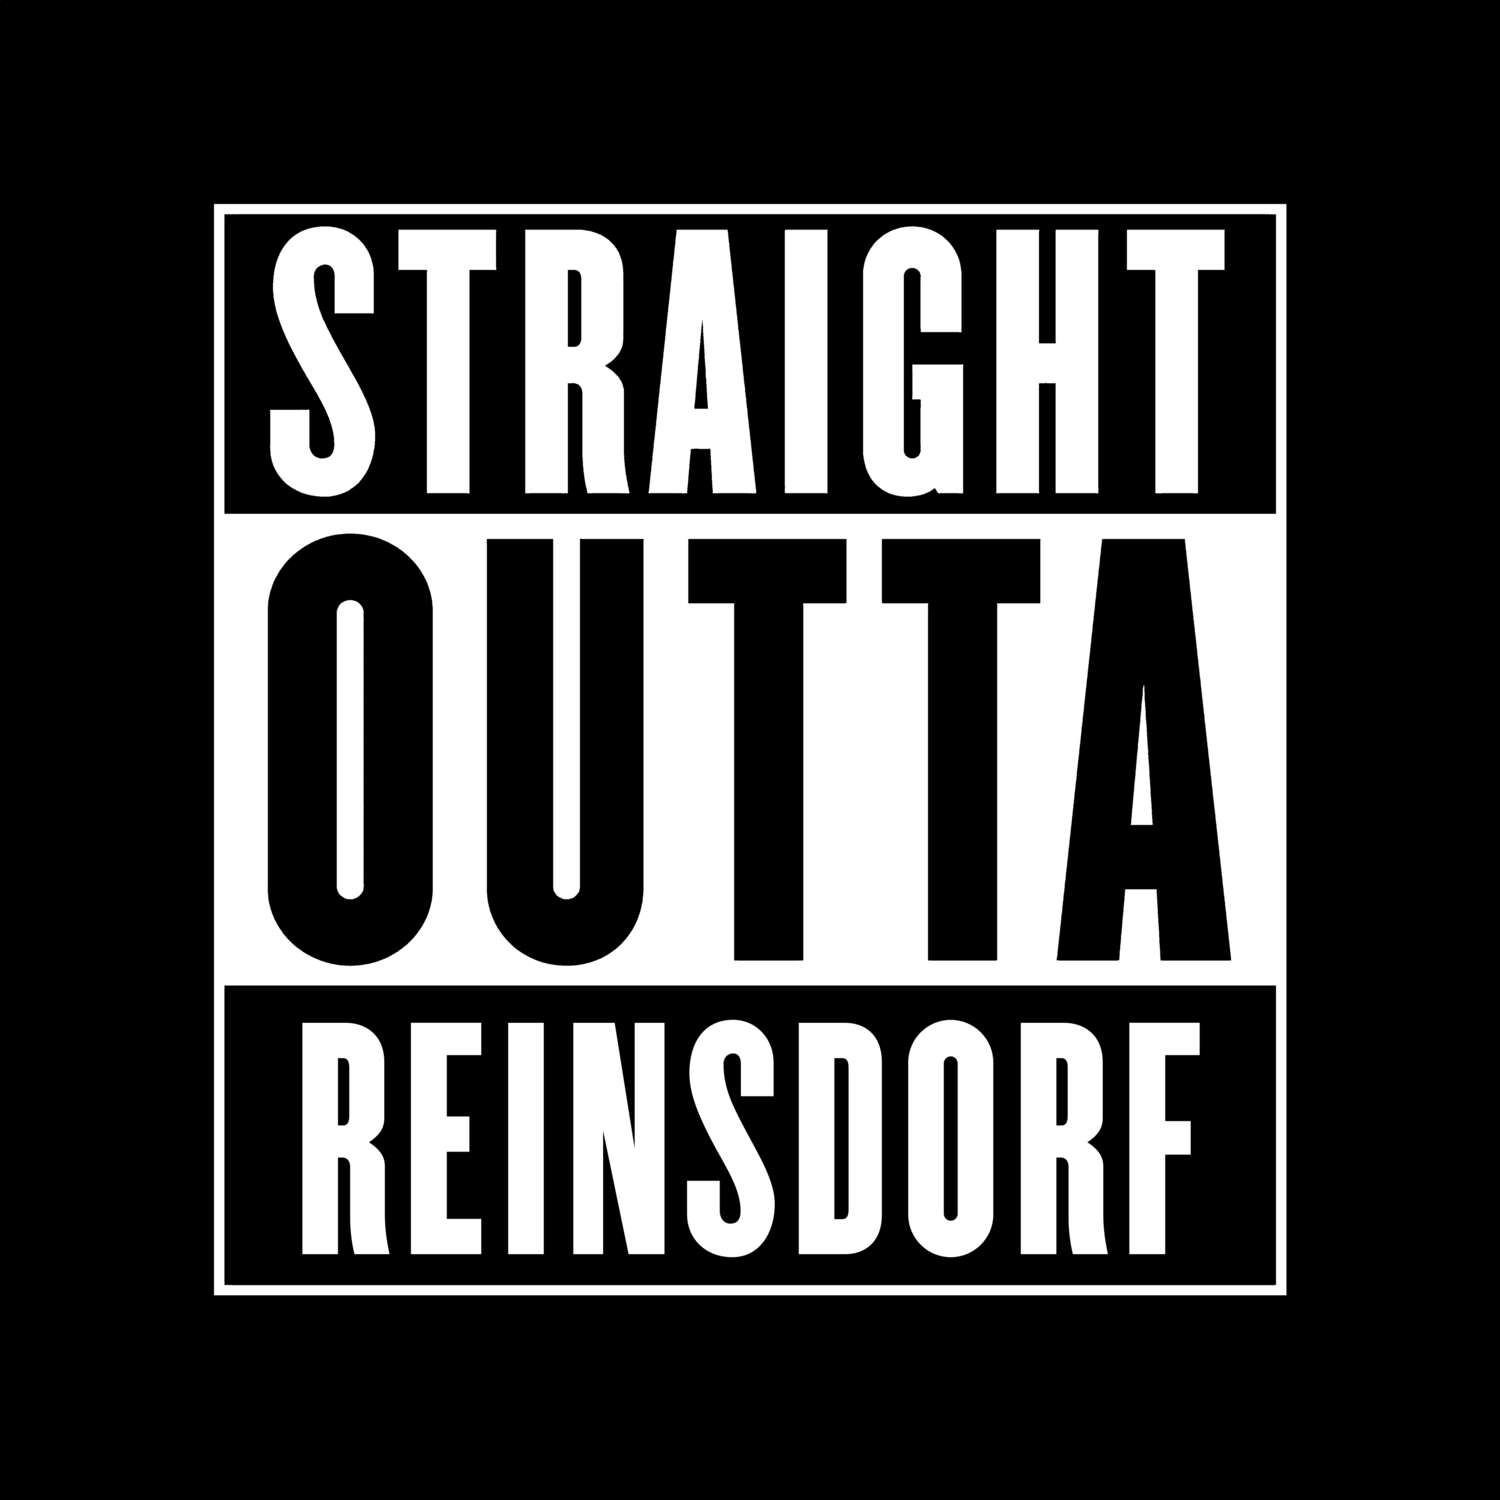 Reinsdorf T-Shirt »Straight Outta«